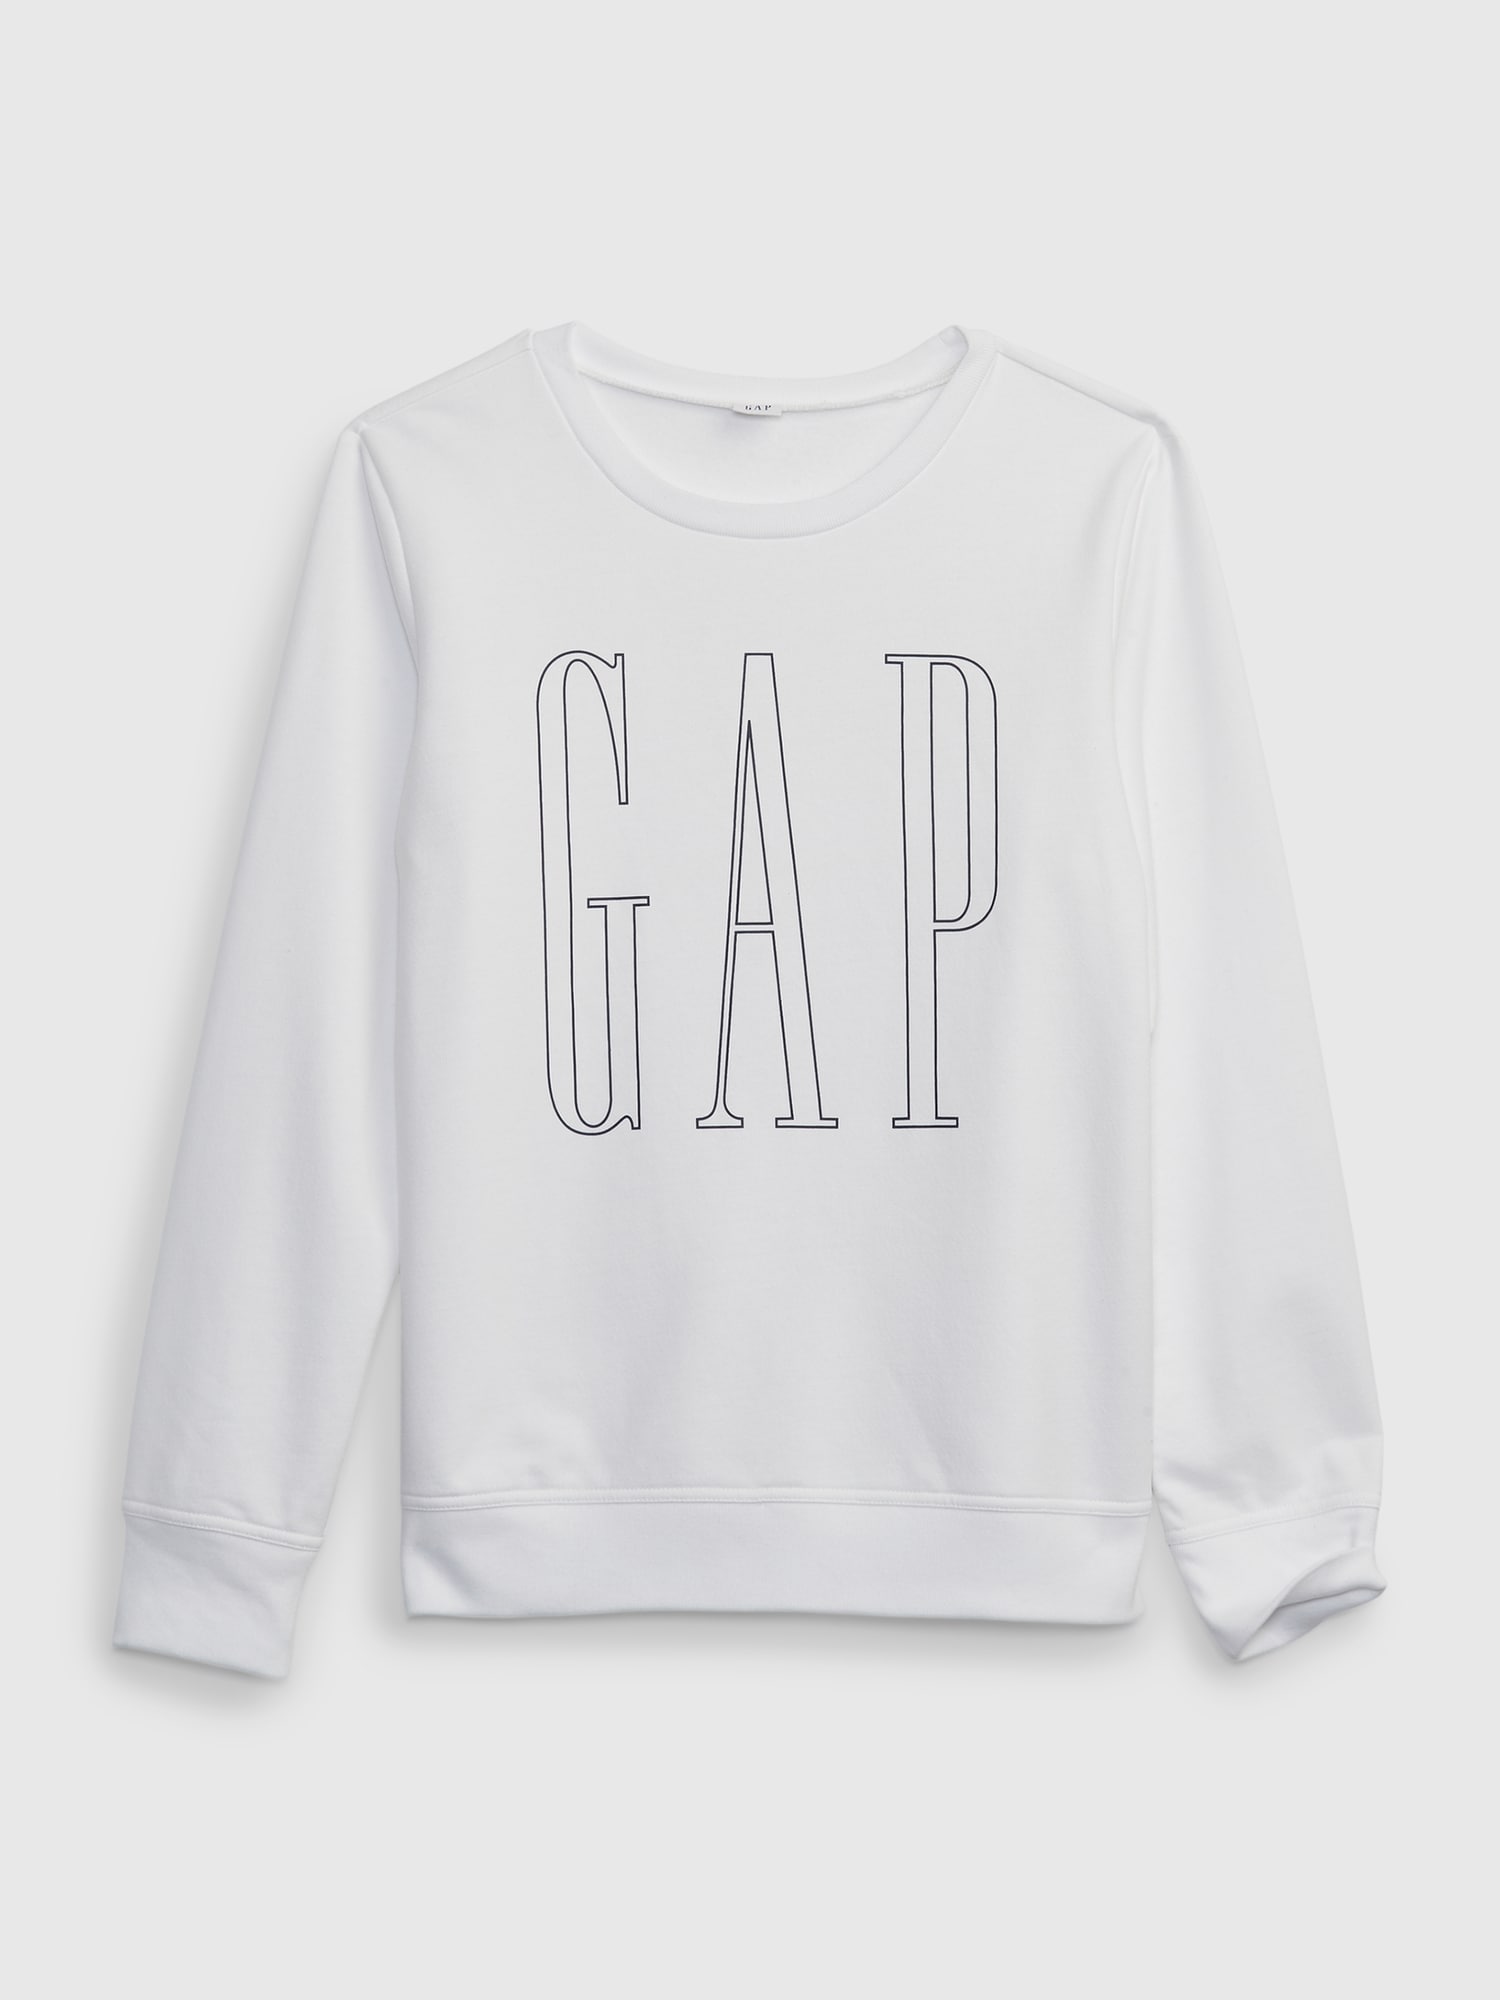 GAP Sweatshirt With Logo And Slits - Women